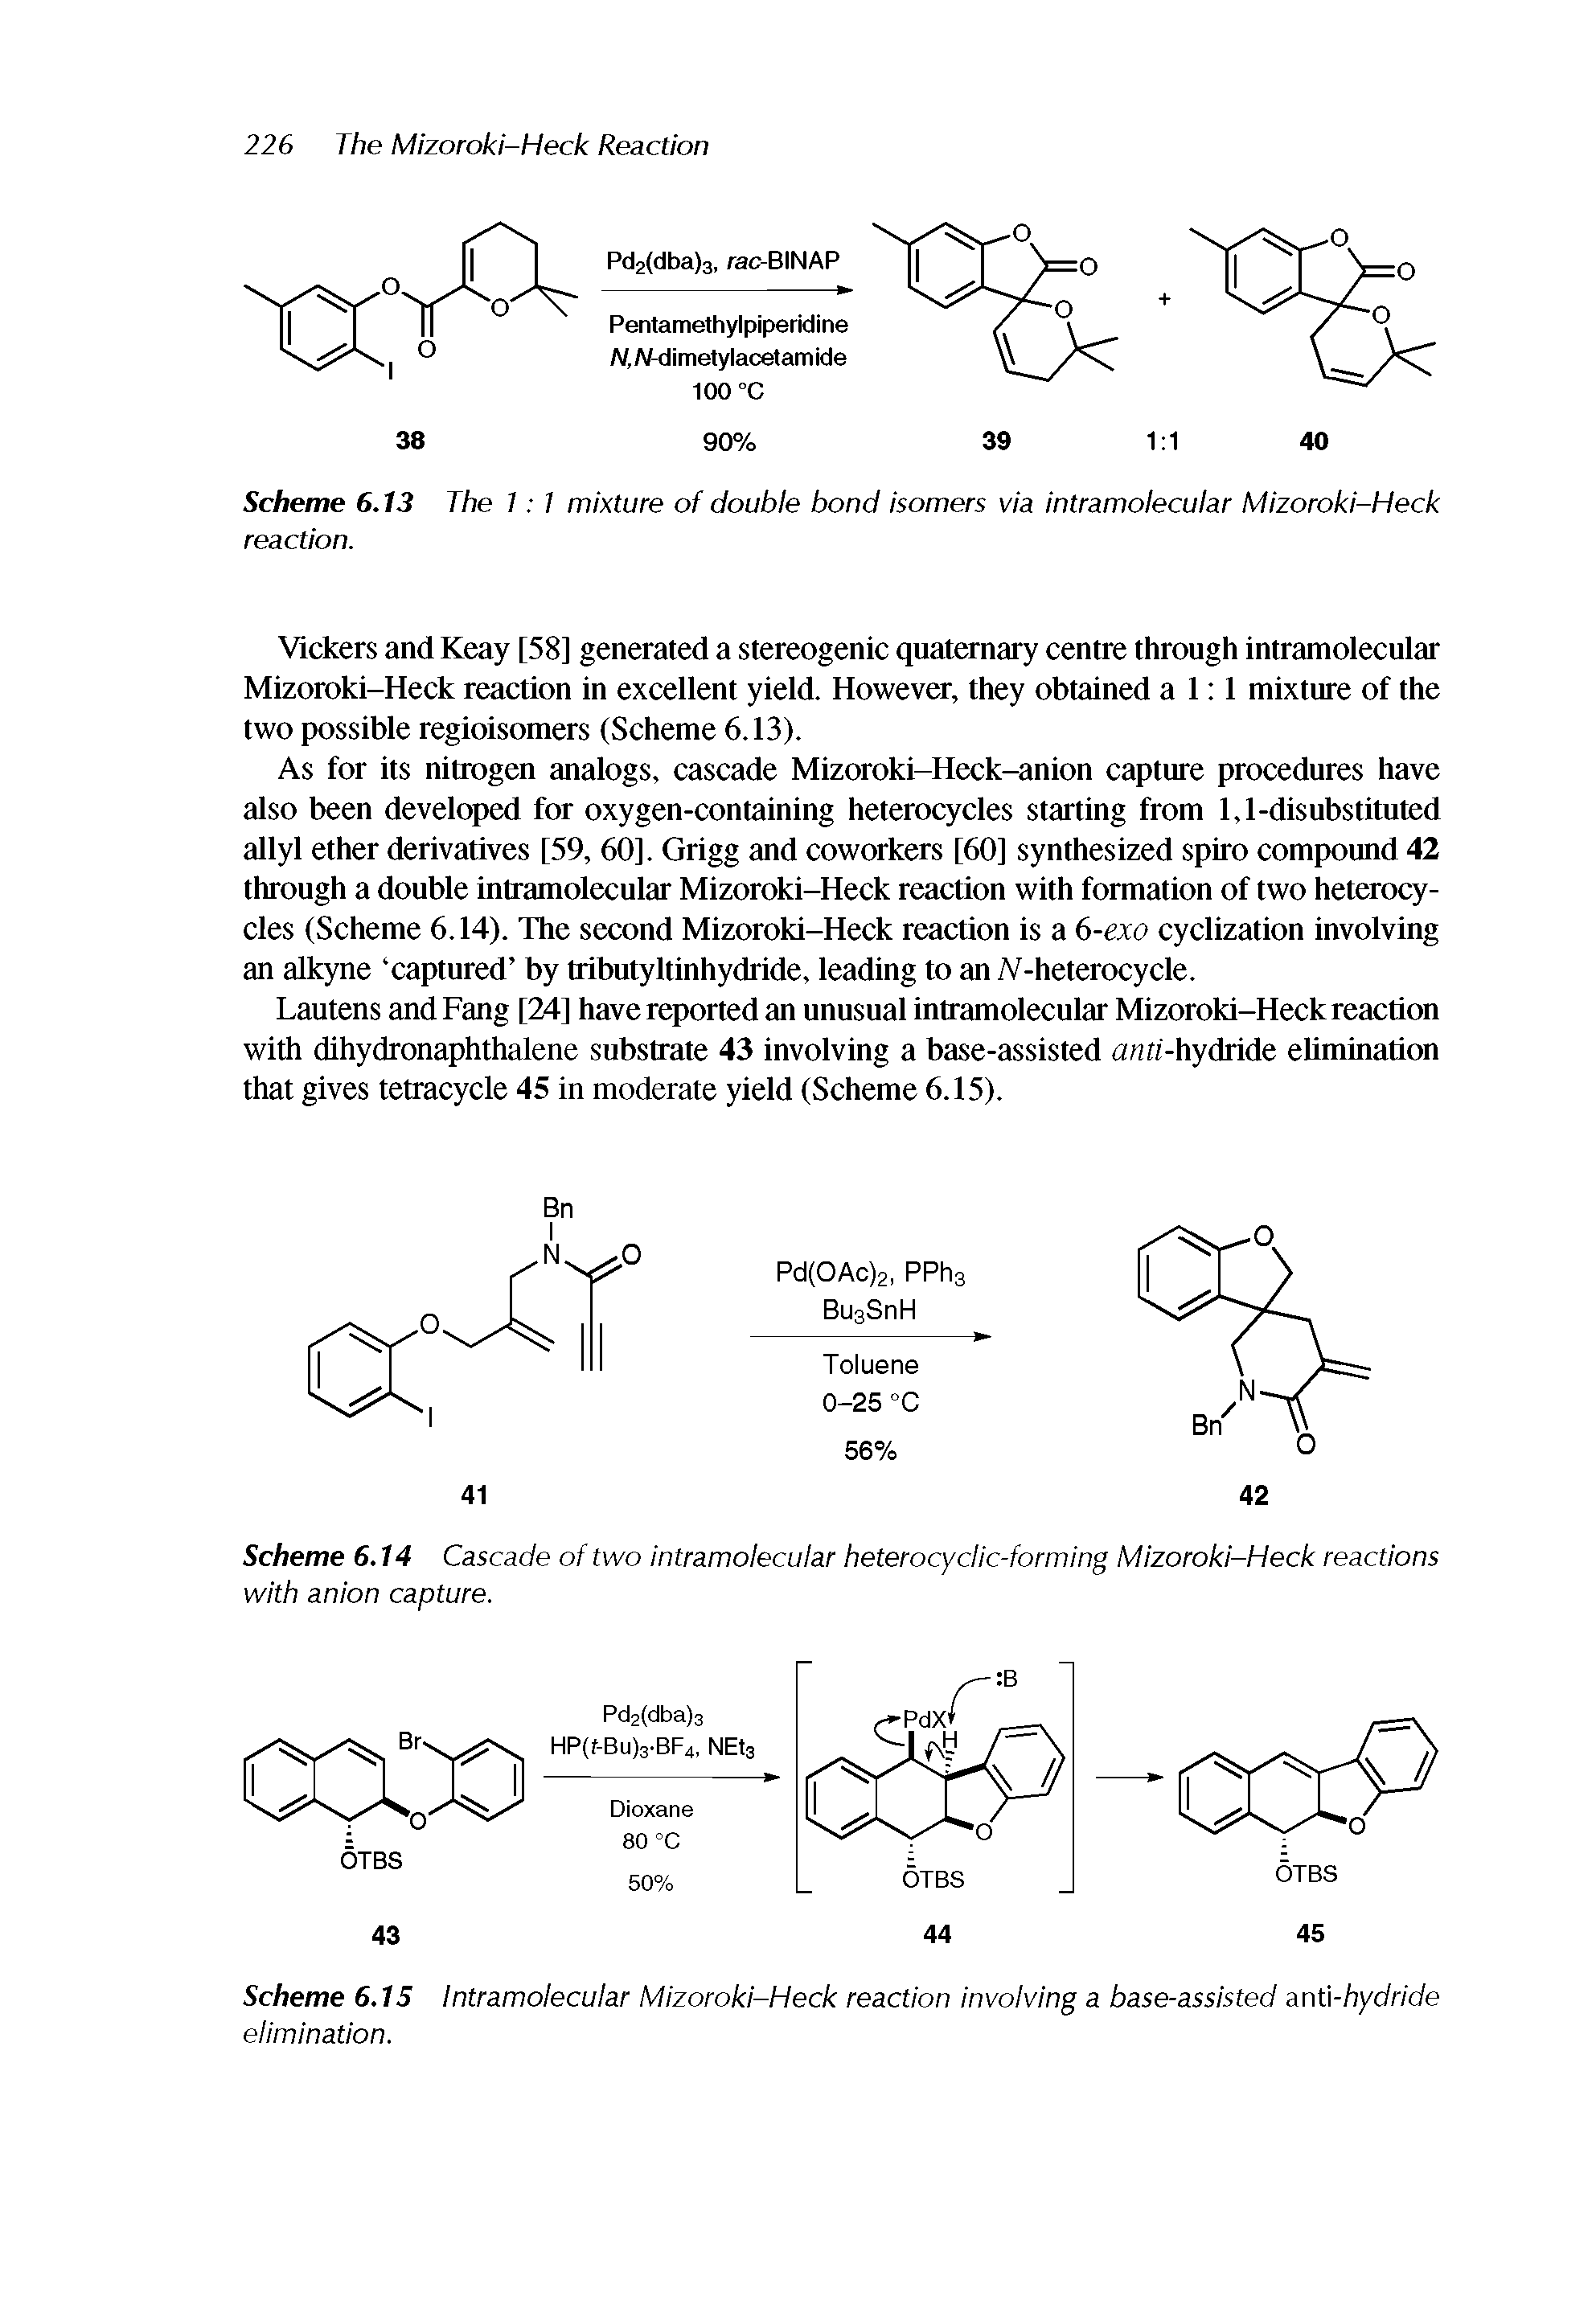 Scheme 6.15 Intramolecular Mizoroki-Heck reaction involving a base-assisted anti-hydride elimination.